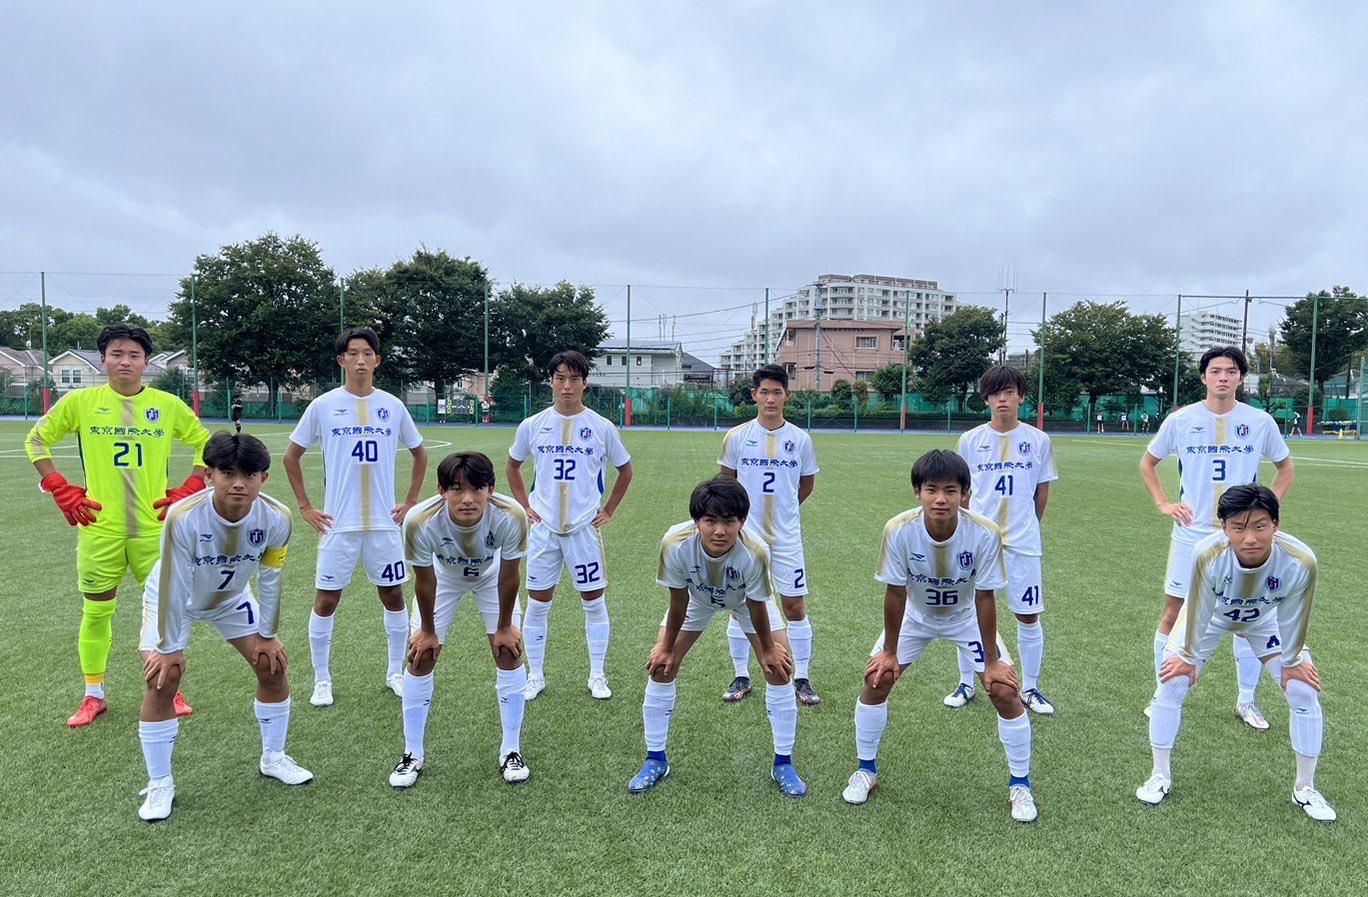 東京国際大学体育会サッカー部 Tiu Fc Twitter